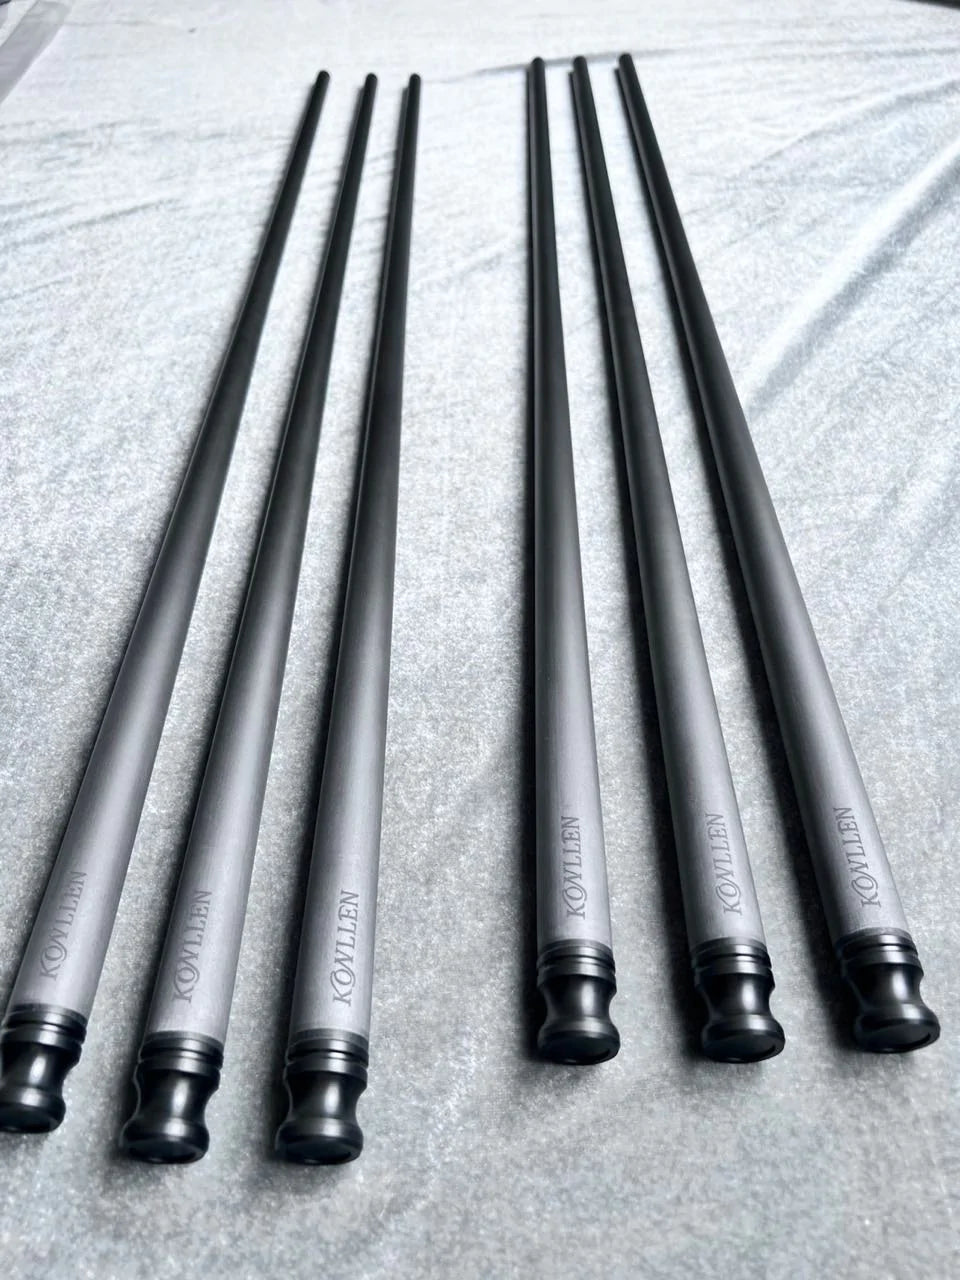 KONLLEN Carbon Fiber Shaft 11.75mm/12.75mm Tip 3/8*8 Radial Pin Joint Technology Low Deflection Billiard Cue Stick Shaft